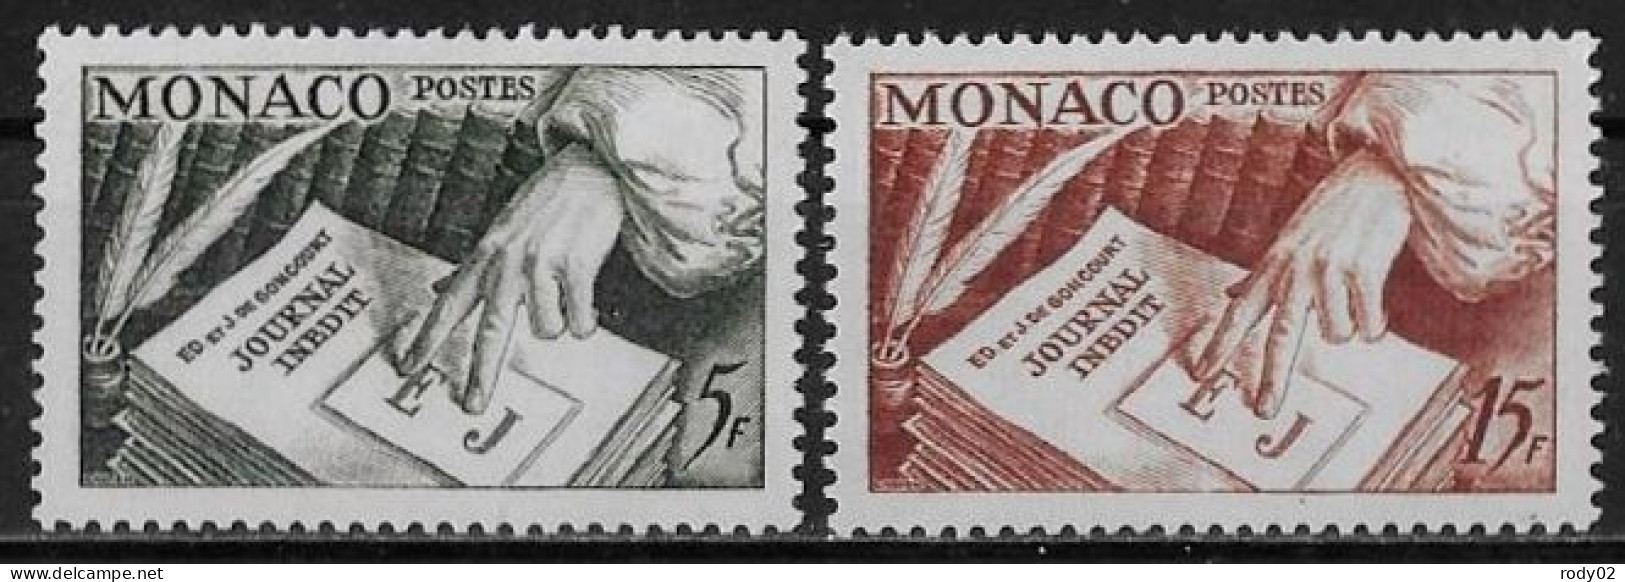 MONACO - JOURNAL INEDIT DES FRERES GONCOURT - N° 392 ET 393 - NEUF** MNH - Nuovi